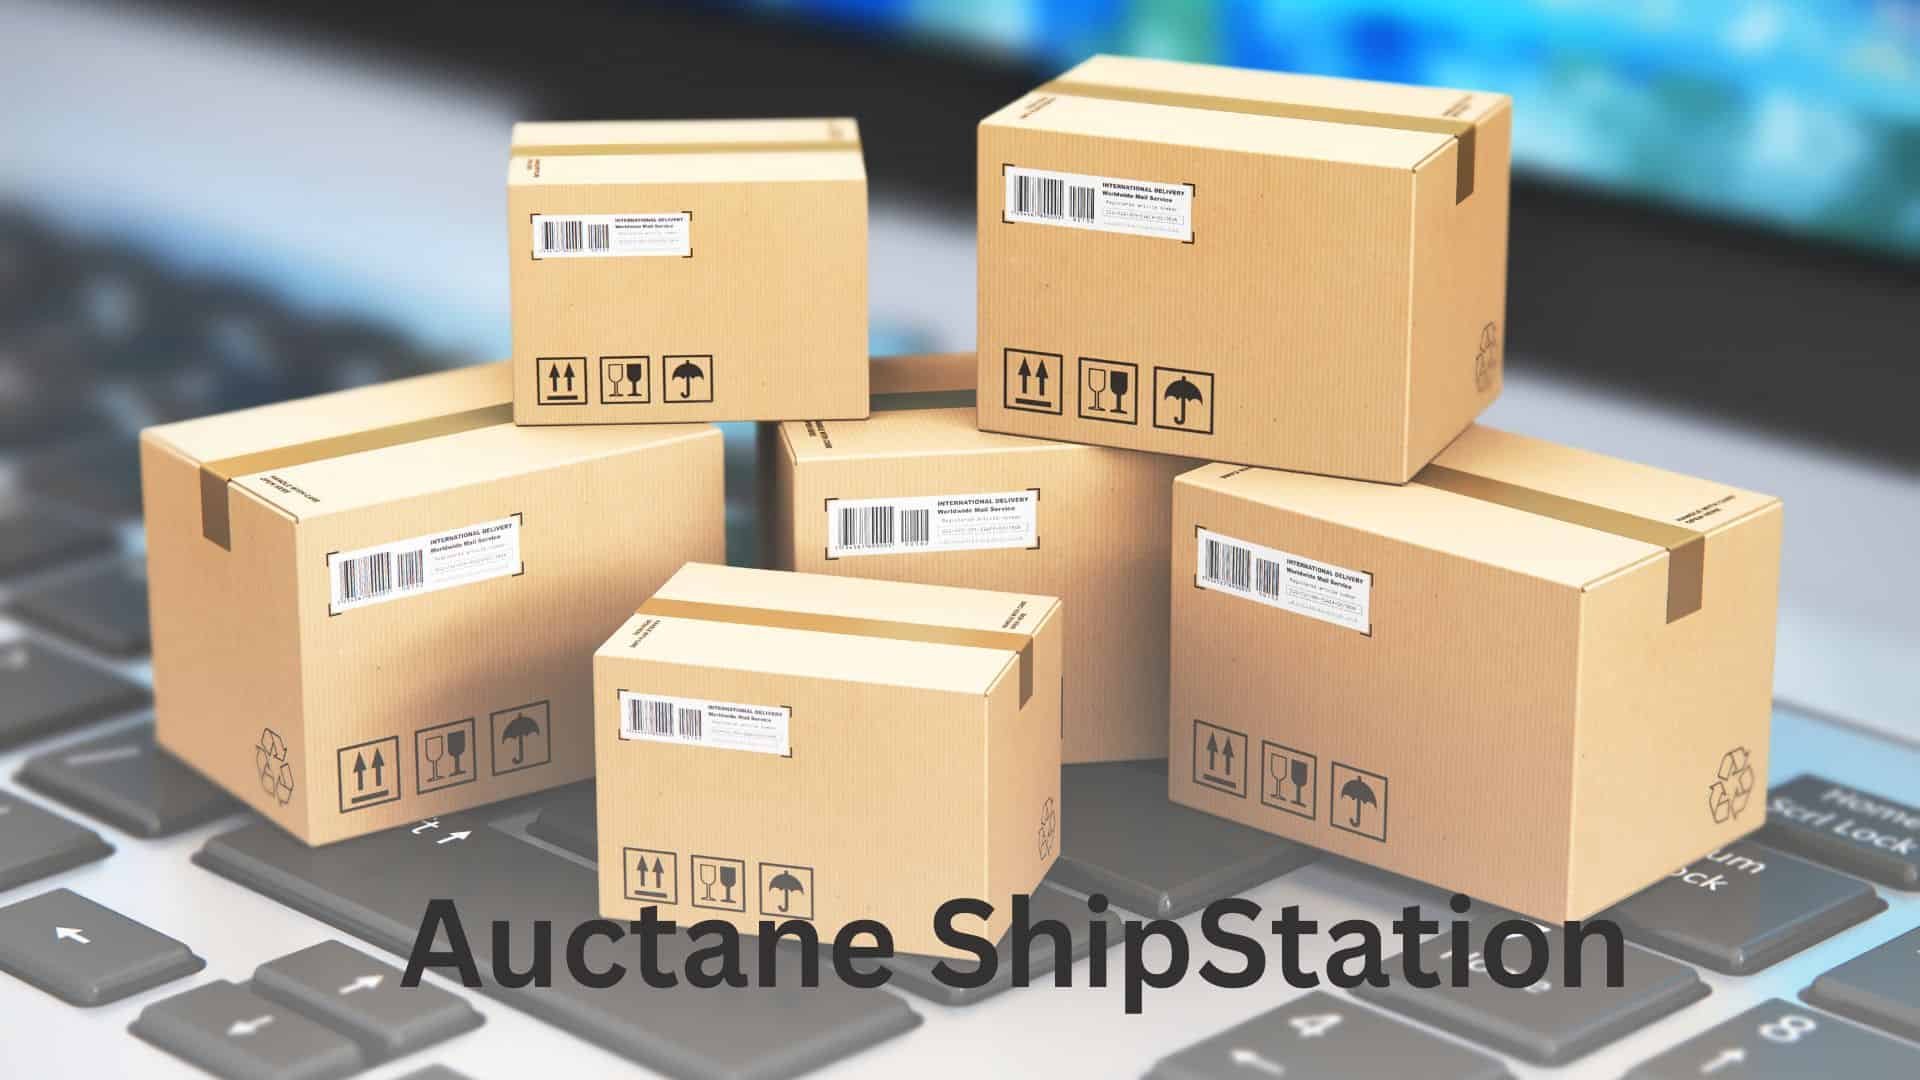 Auctane ShipStation